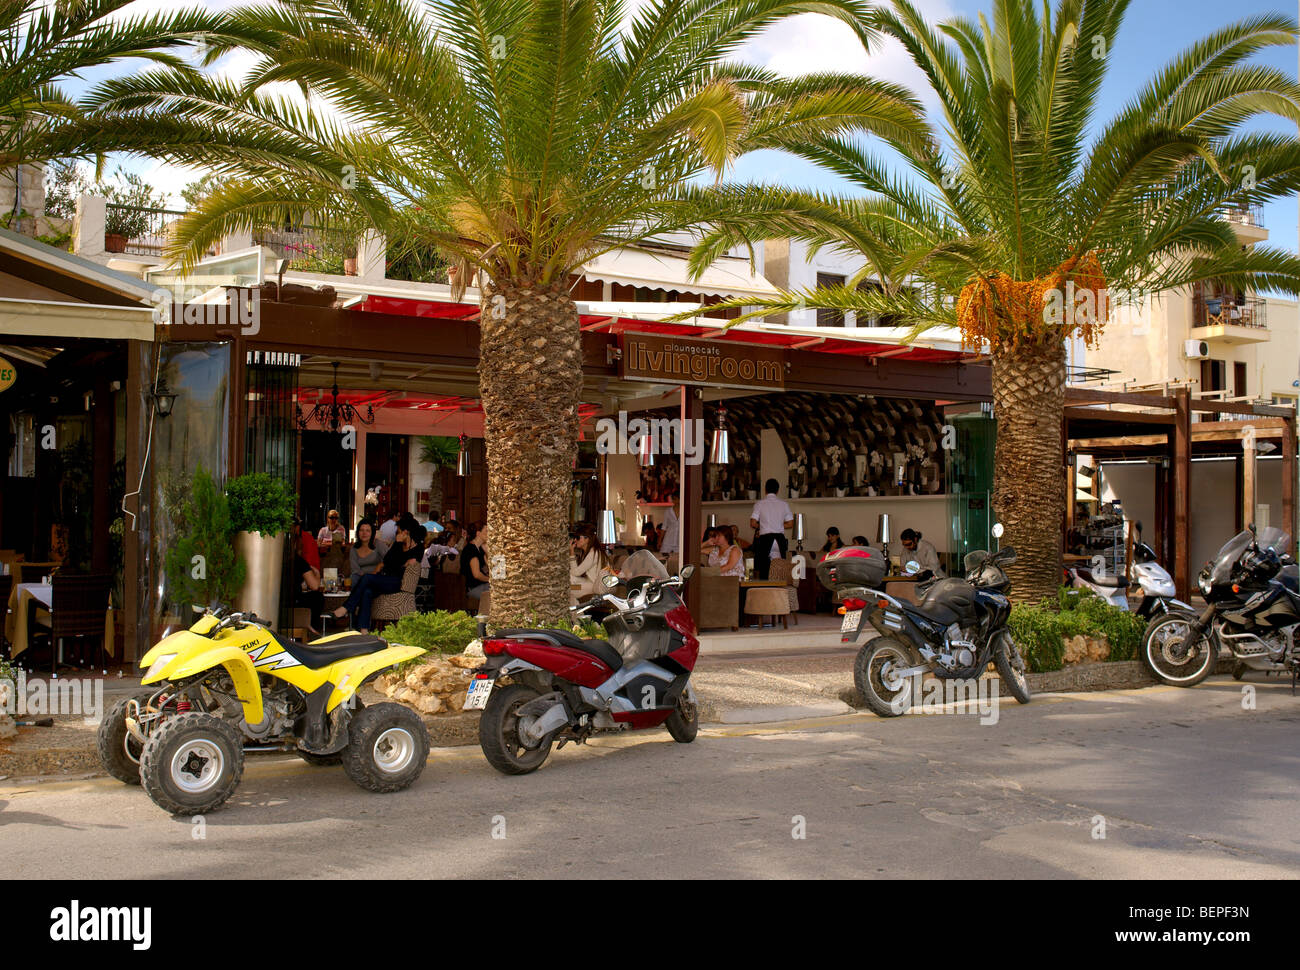 drängten sich 'living room' café-bar mit motorrädern und palmen